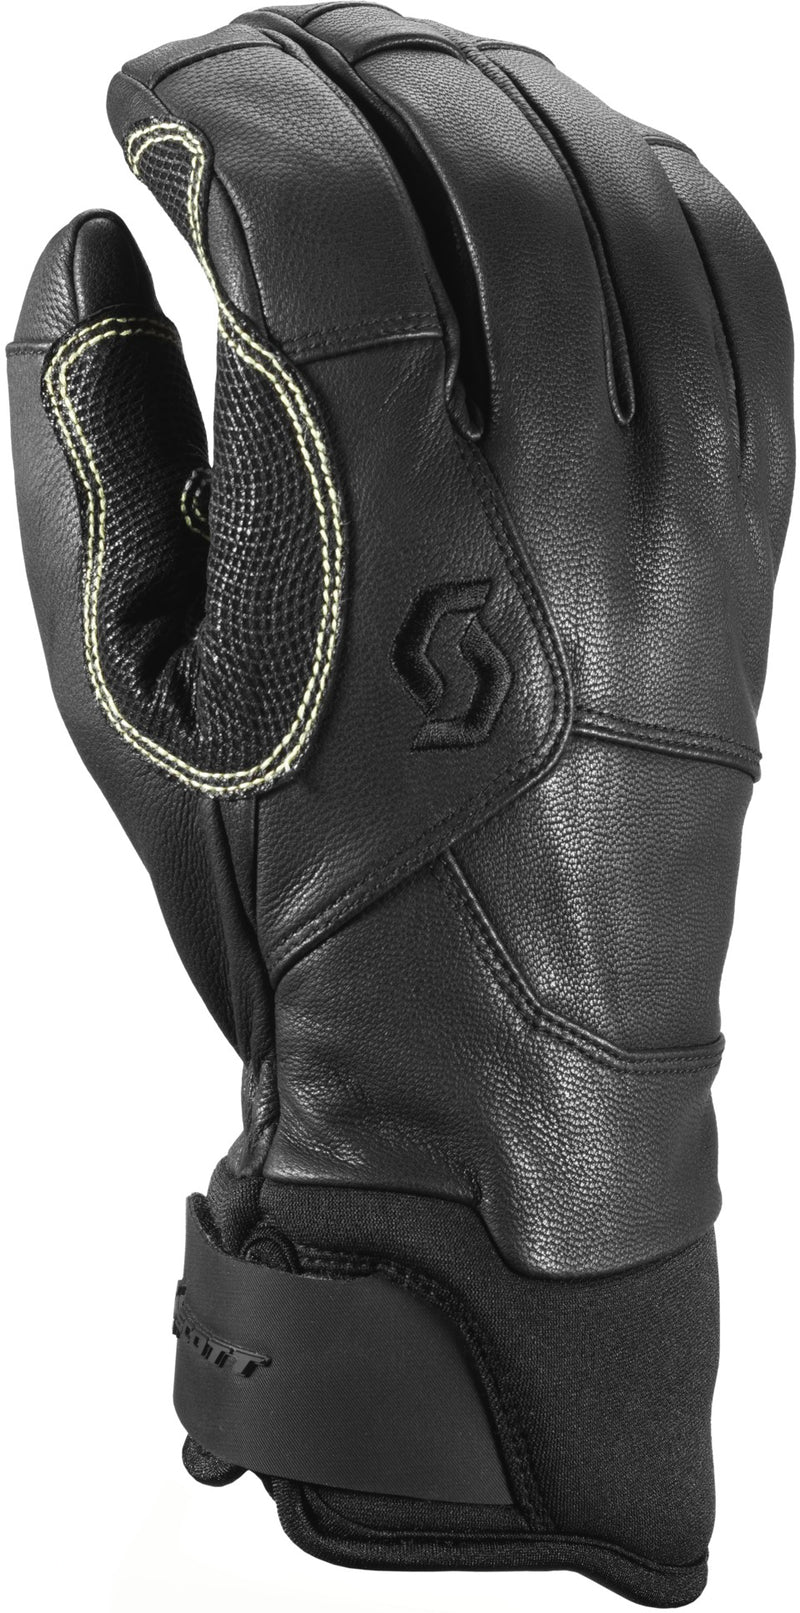 Scott - Explorair Premium GTX - Black - Apparelly Gloves